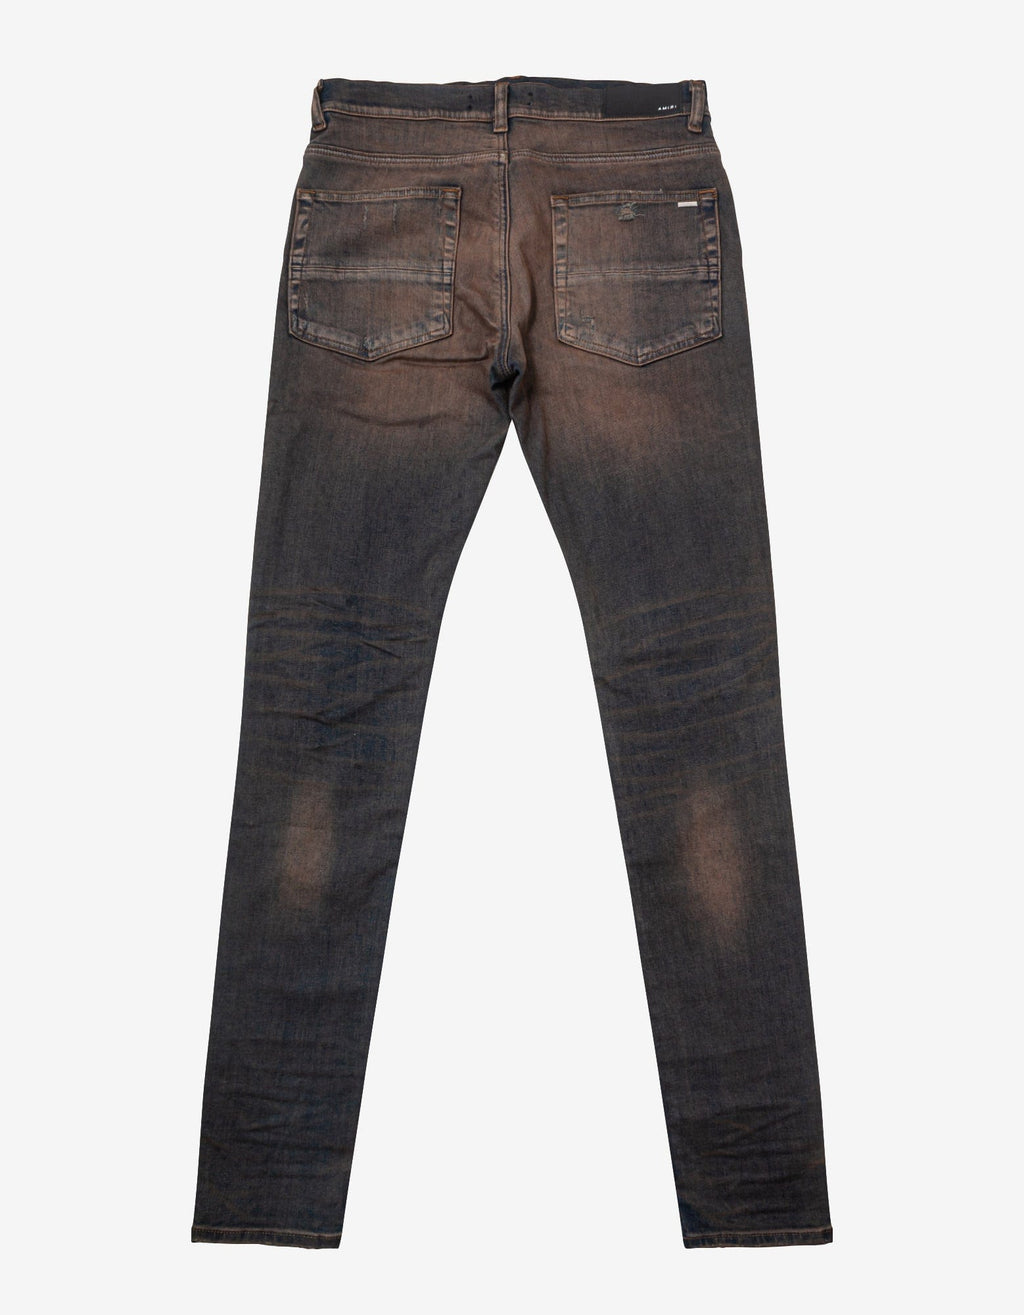 Amiri MX1 Plaid Dark Indigo Jeans